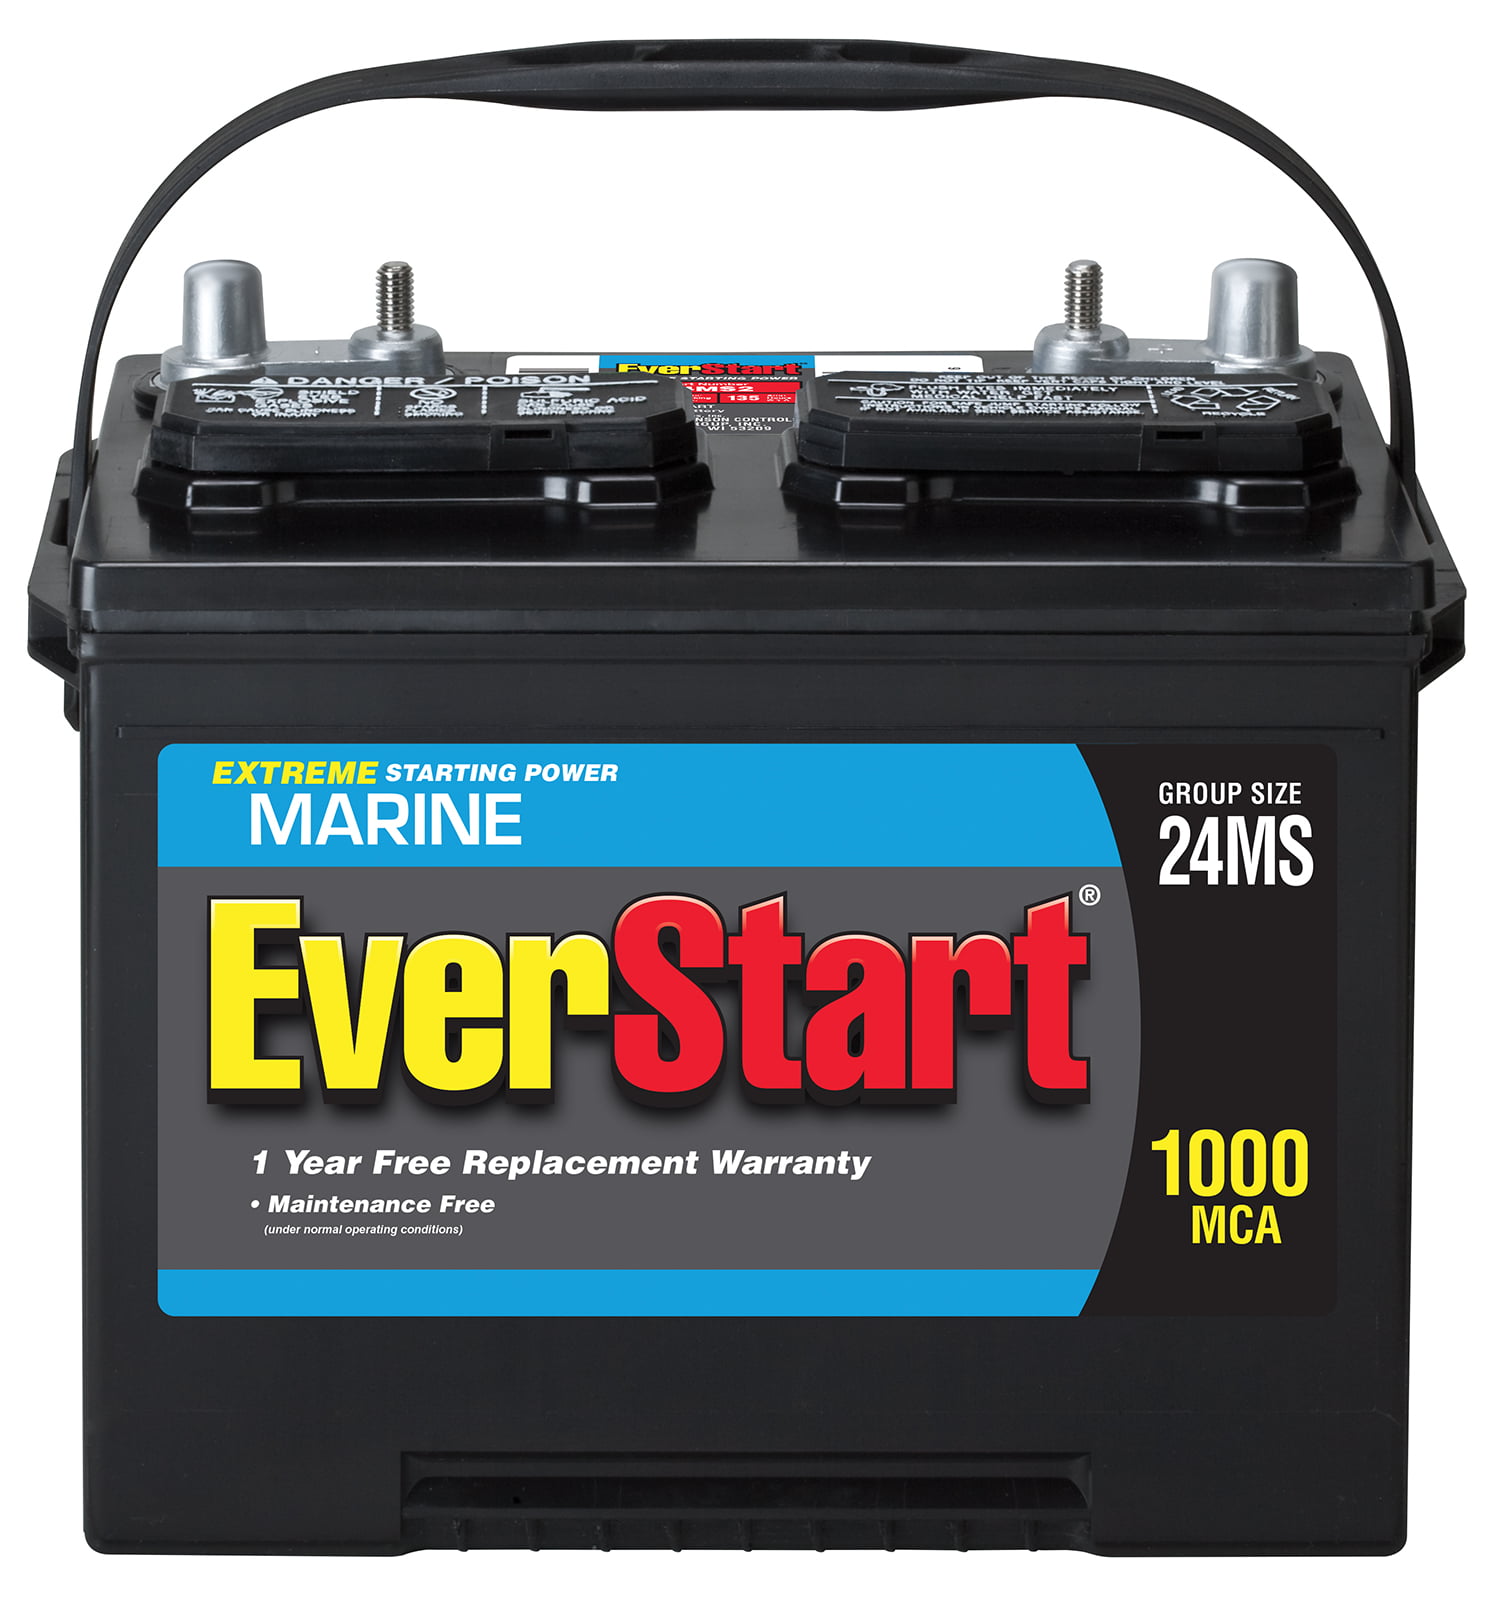 Find battery. АКБ ever start Maxx h5. Everstart lead acid Marine starting Battery, Group Size 24ms - 1000 MCA (12 Volt/1000 MCA). АКБ ever start AGM для мотоцикла. Ever start.